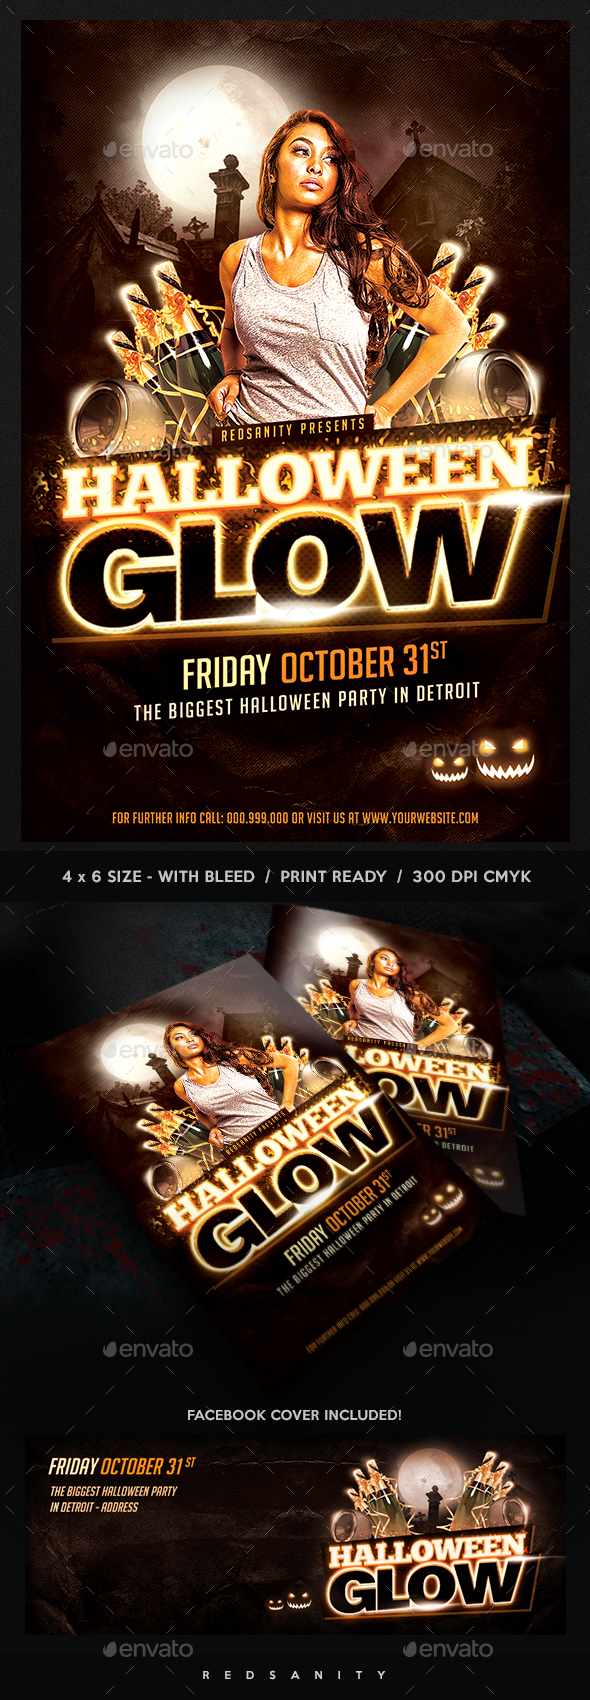 Halloween Glow Flyer Plus FB Cover